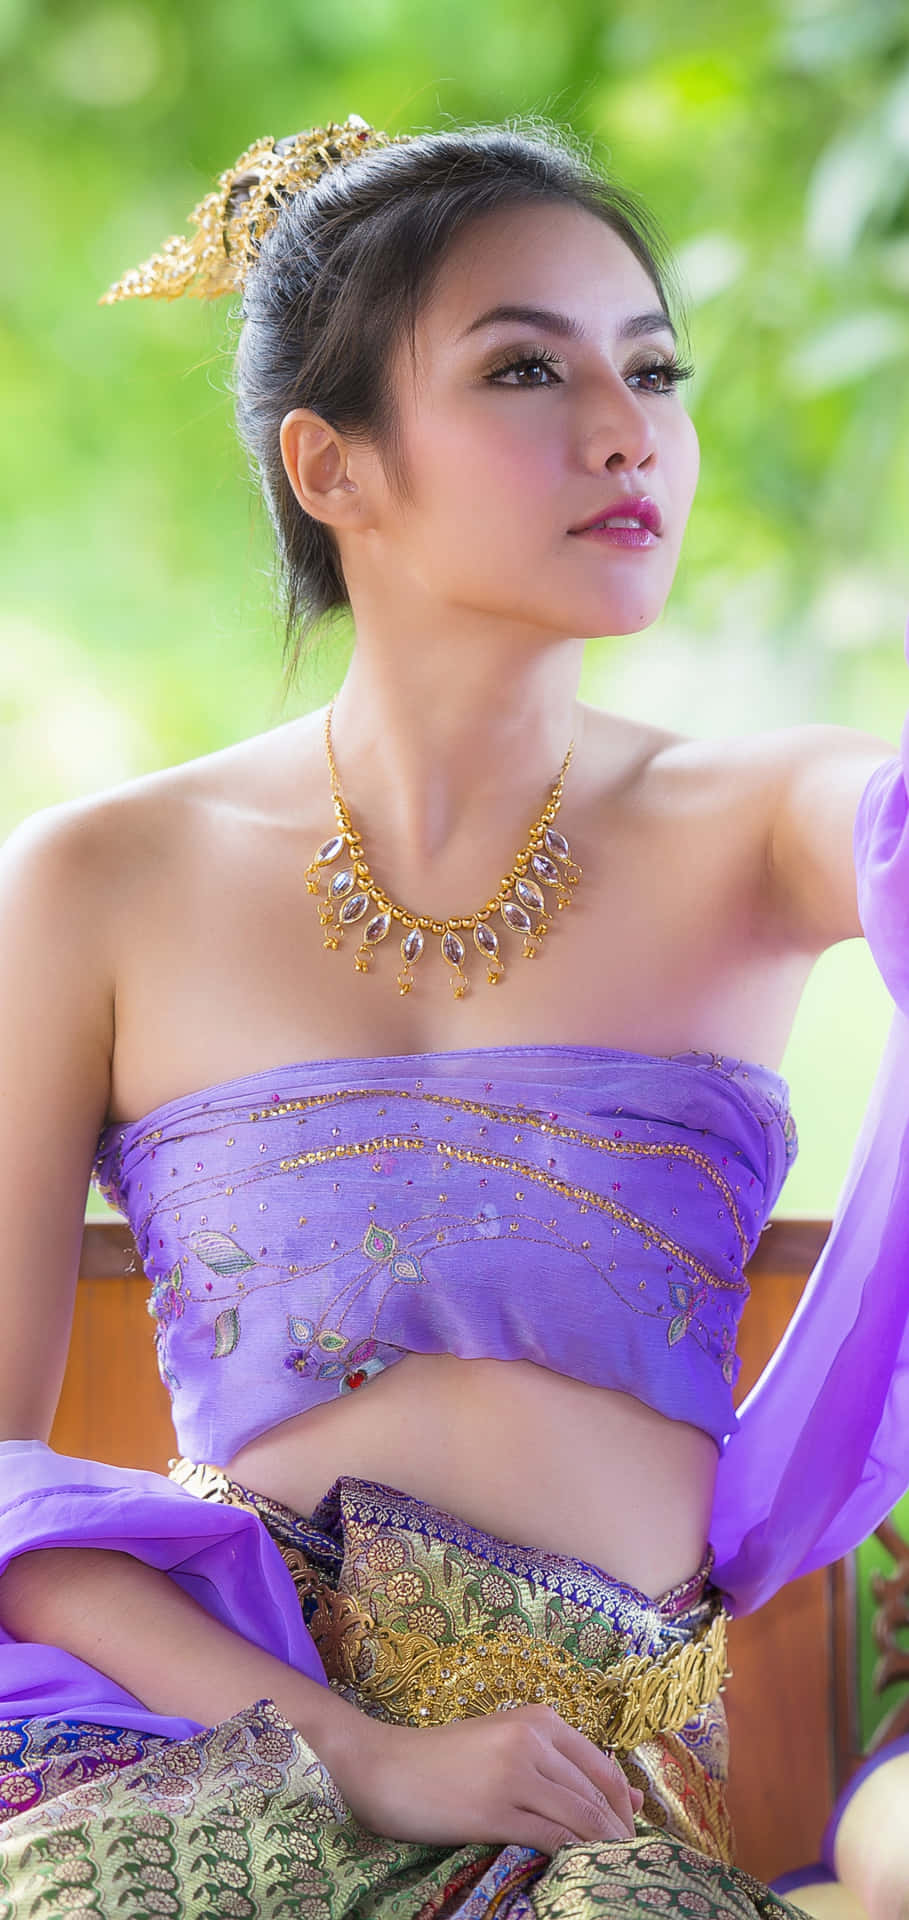 Thai Girl Wearing Purple Top Wallpaper